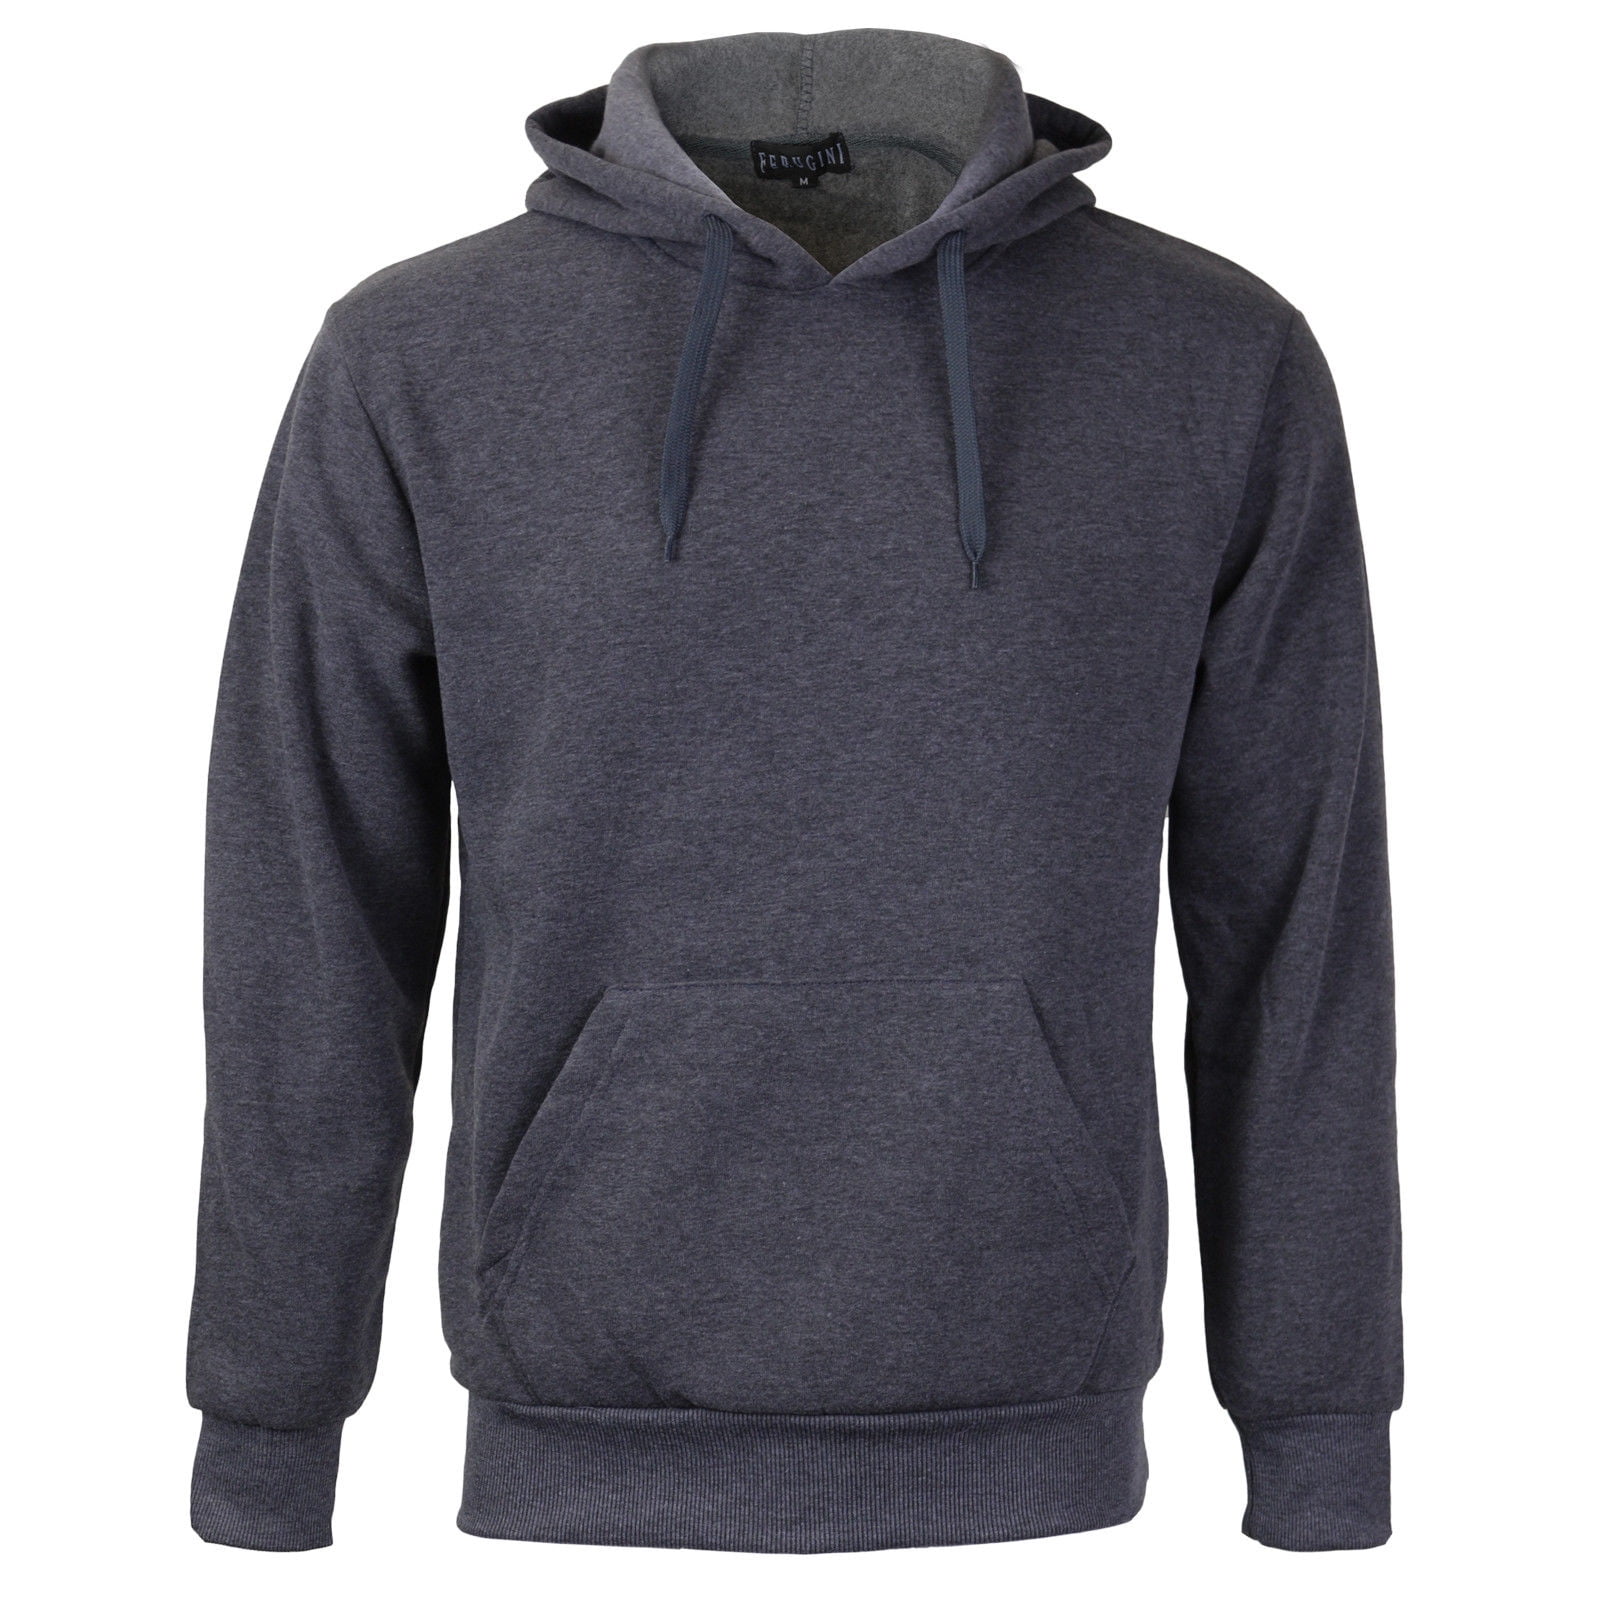 Men's Premium Athletic Drawstring Fleece Lined Sport Gym Sweater ...